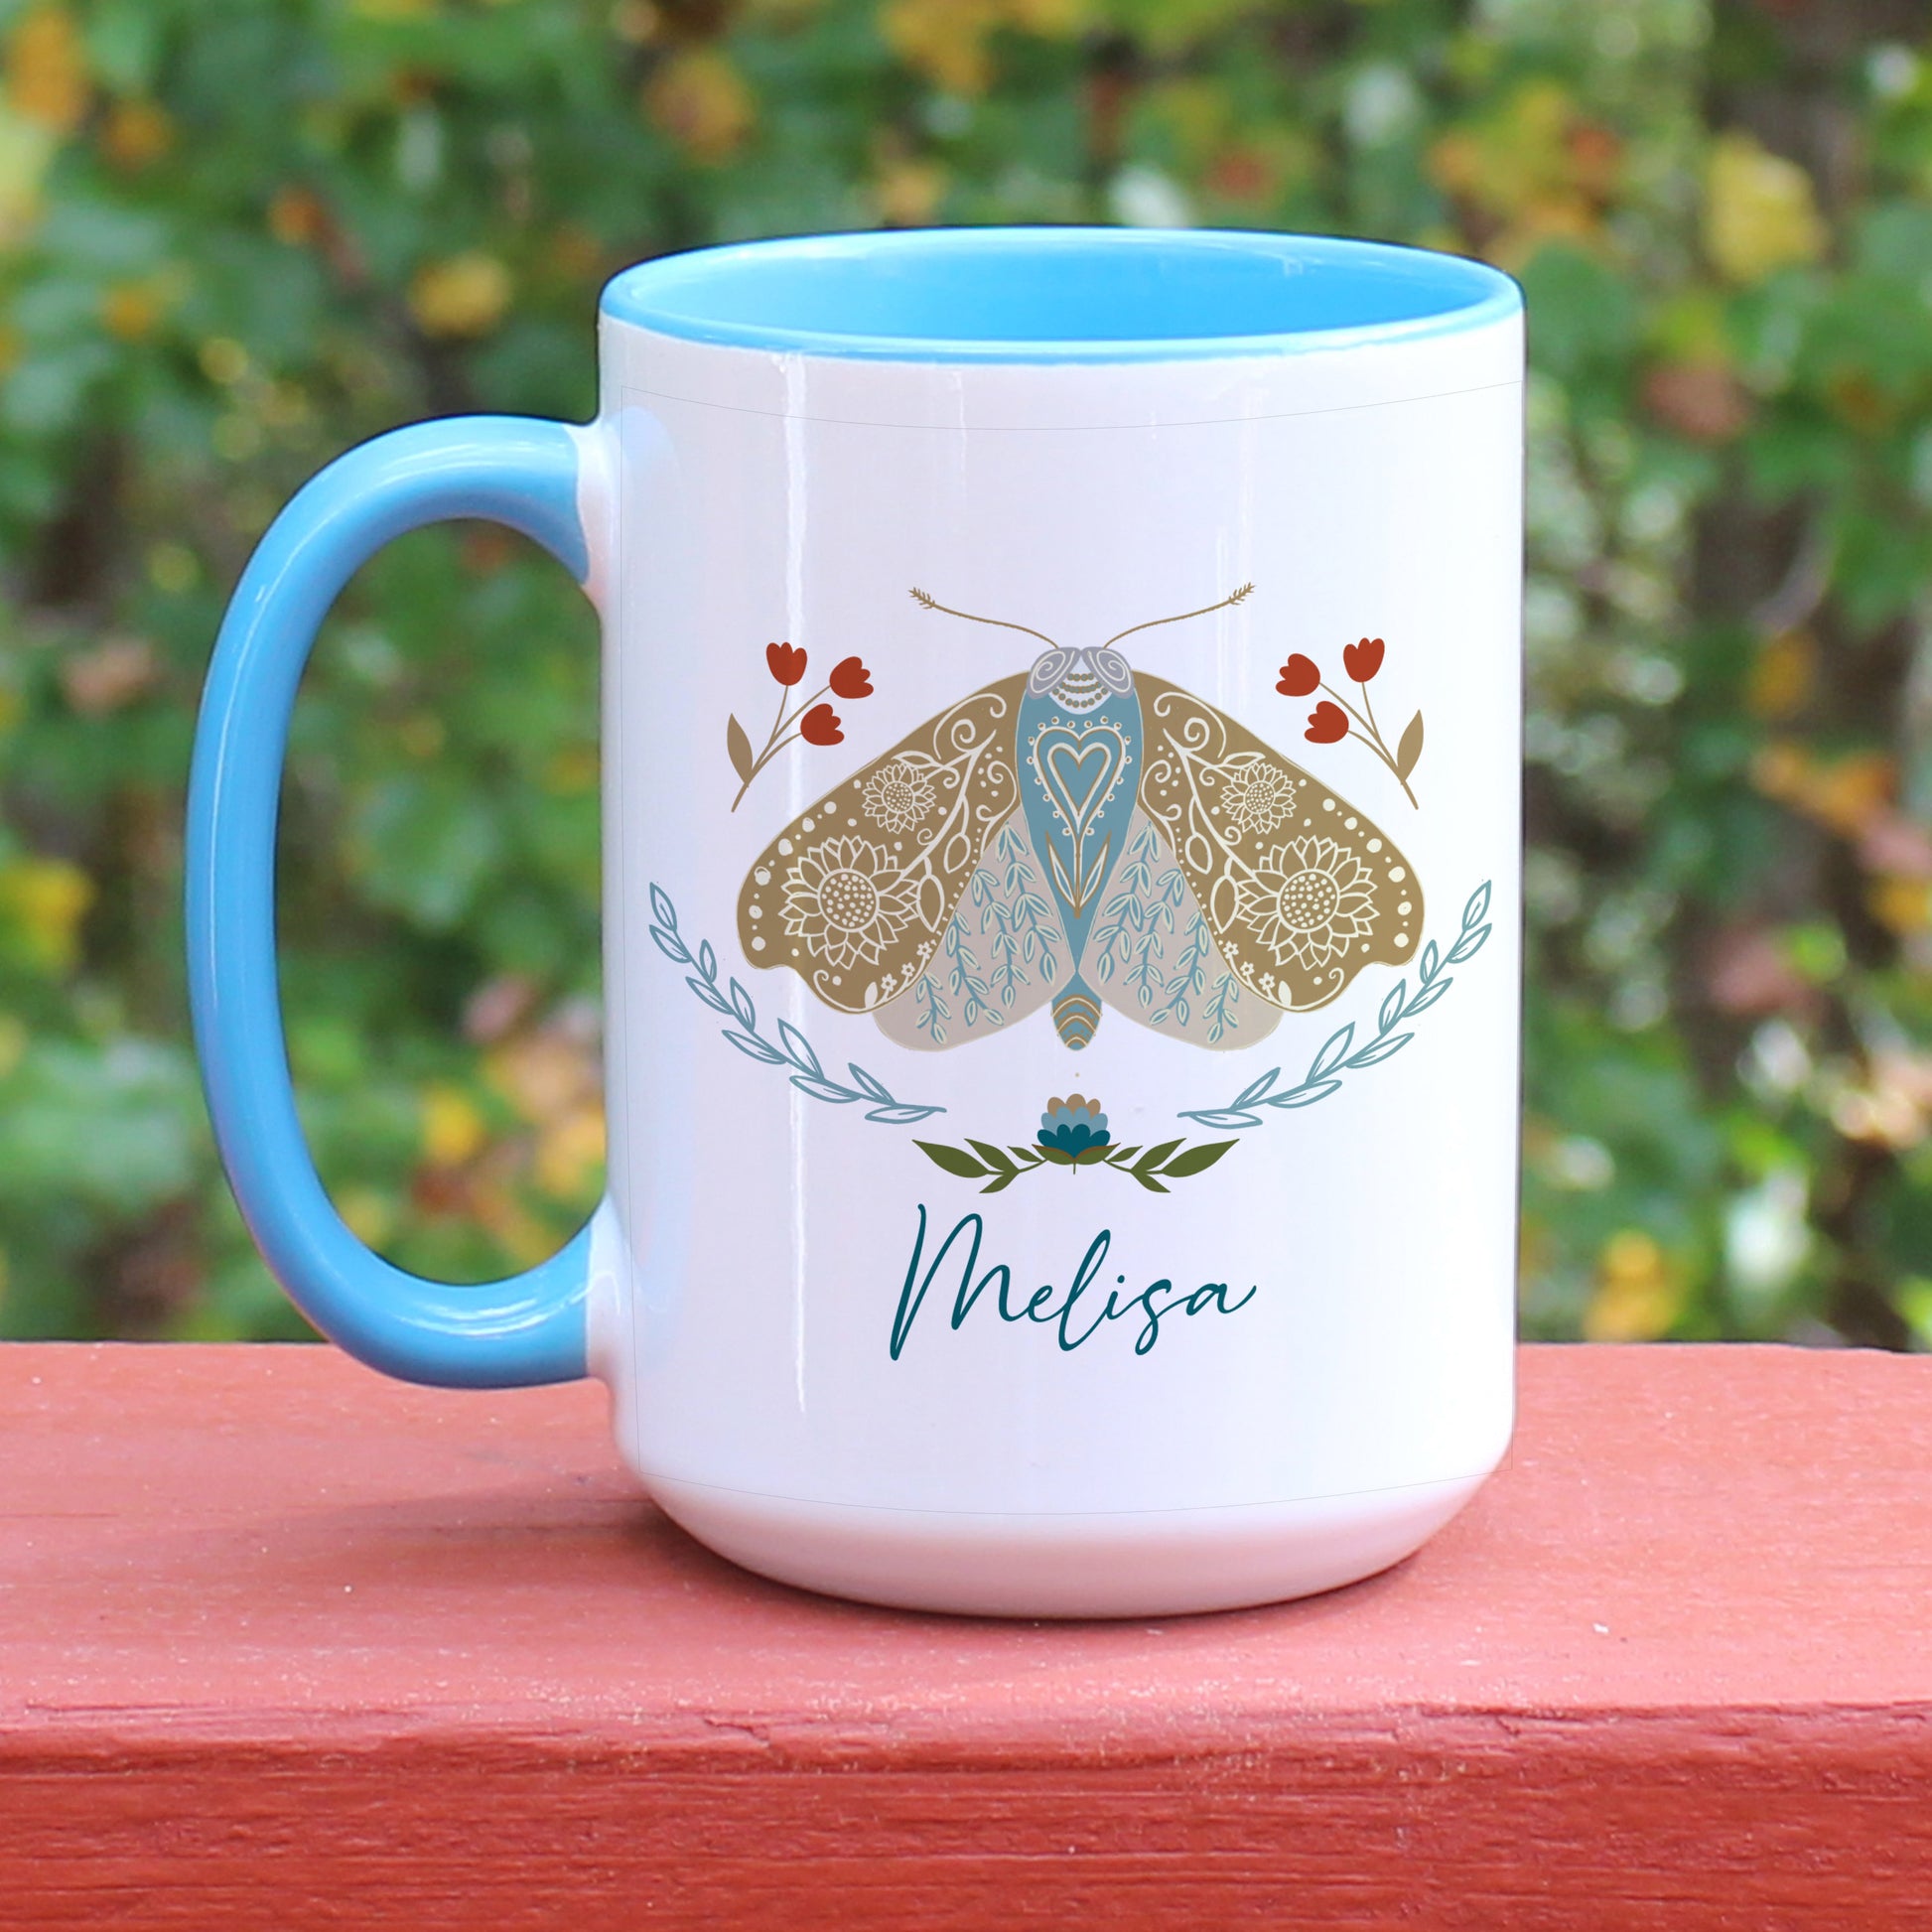 Boho floral moth mug personalized with name. The mug has a blue handle.